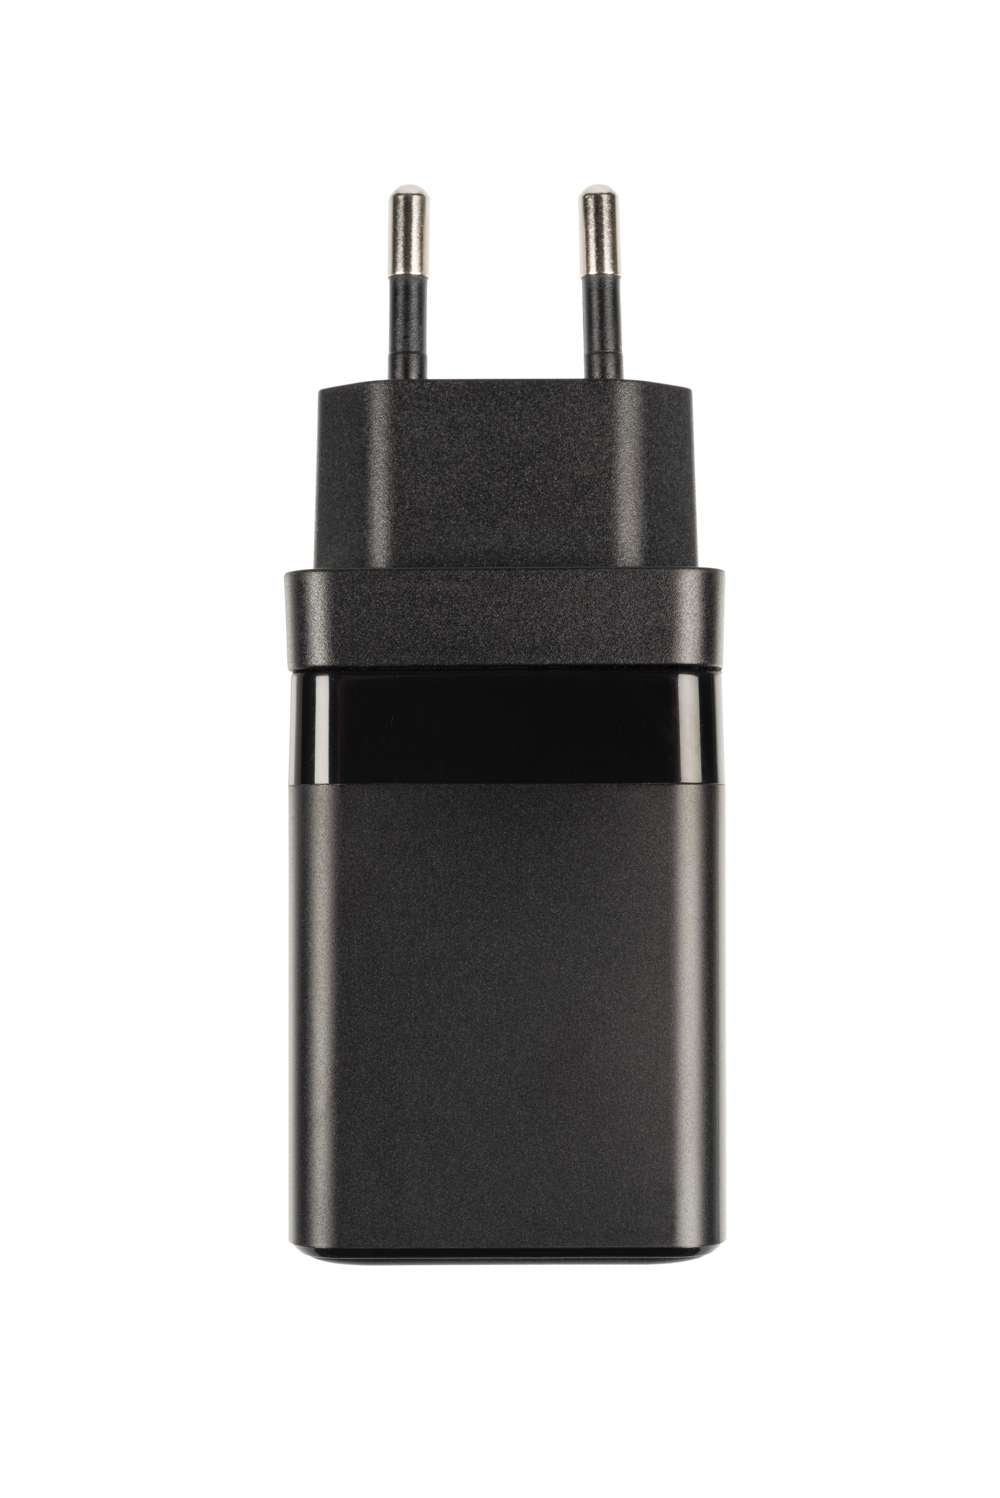 Volt AC Reiseadapter 2 x USB + USB auf USB-C Kabel - Schwarz